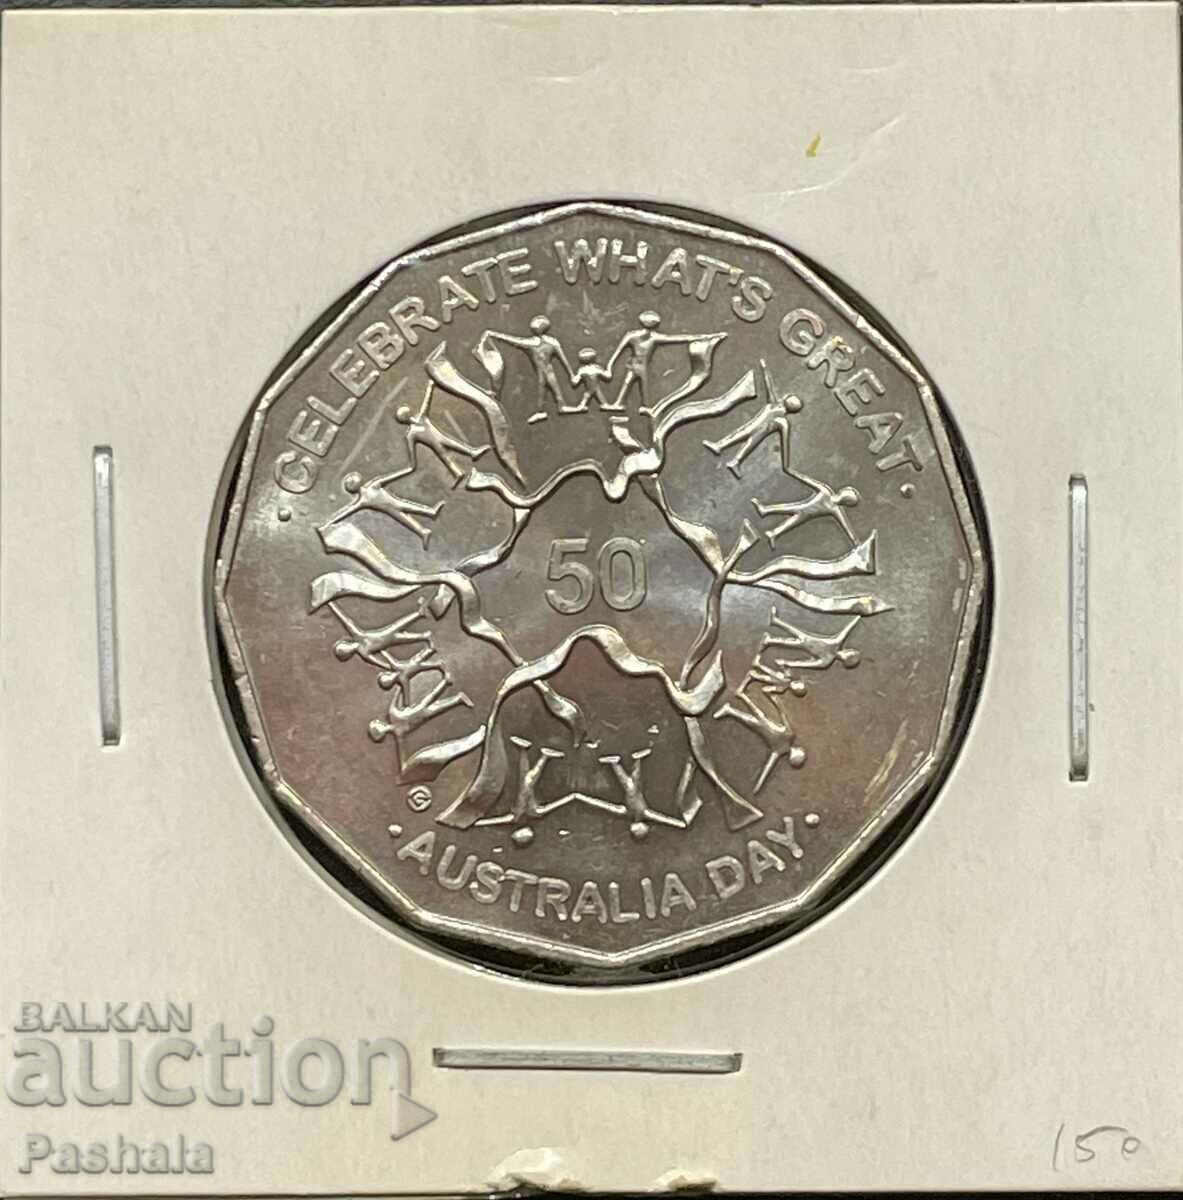 Australia 50 cents 2010